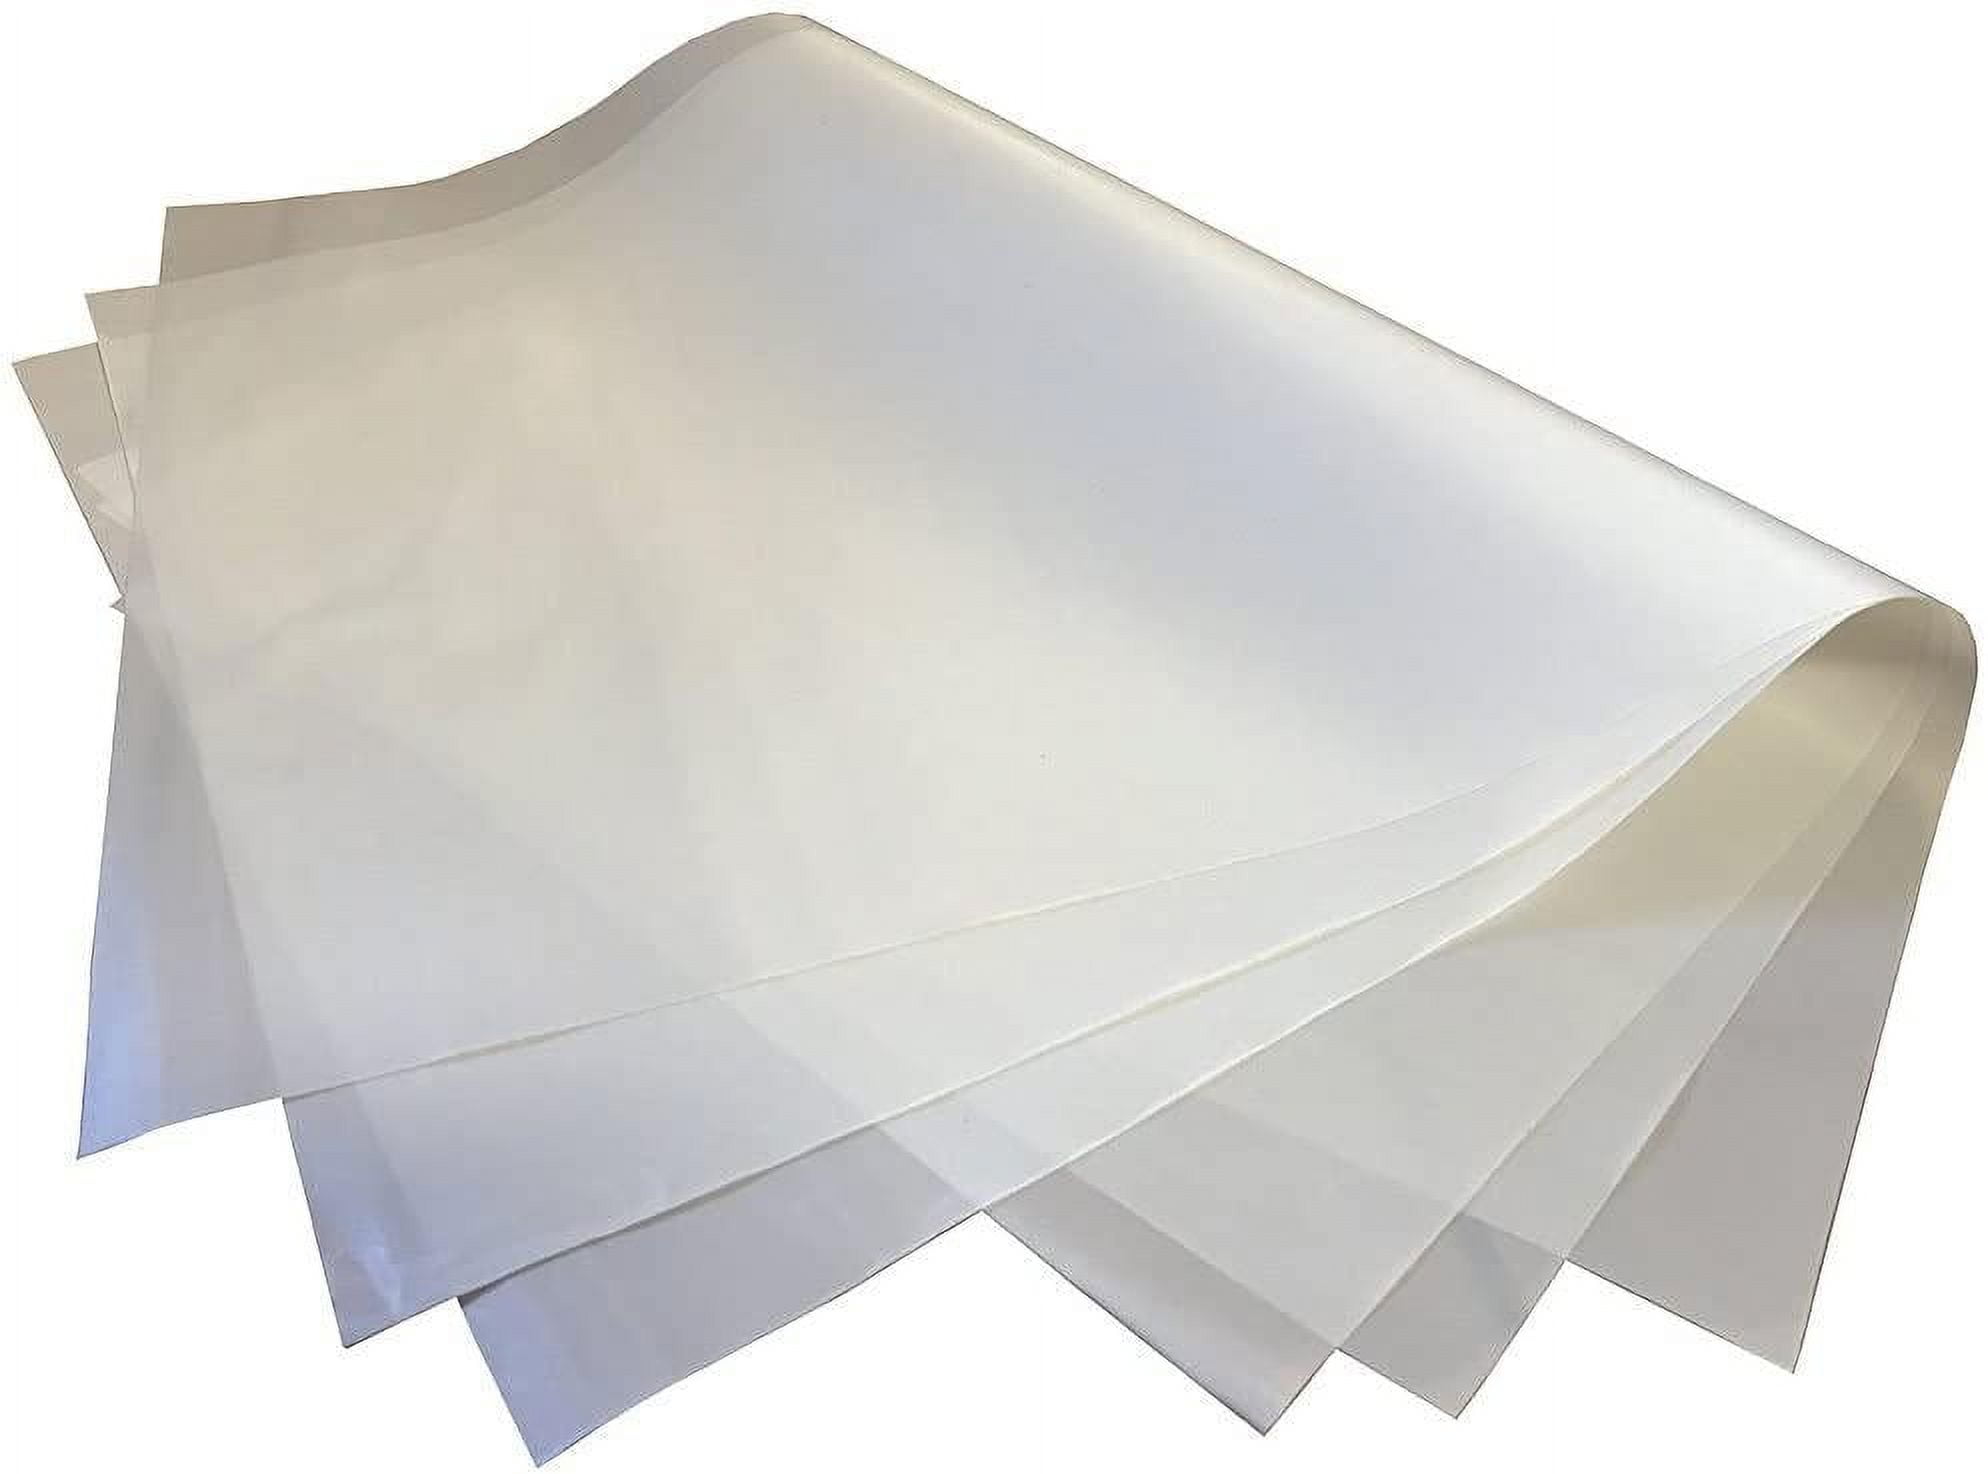 3 Pack PTFE Teflon Sheet For Heat Press Transfer Kenya